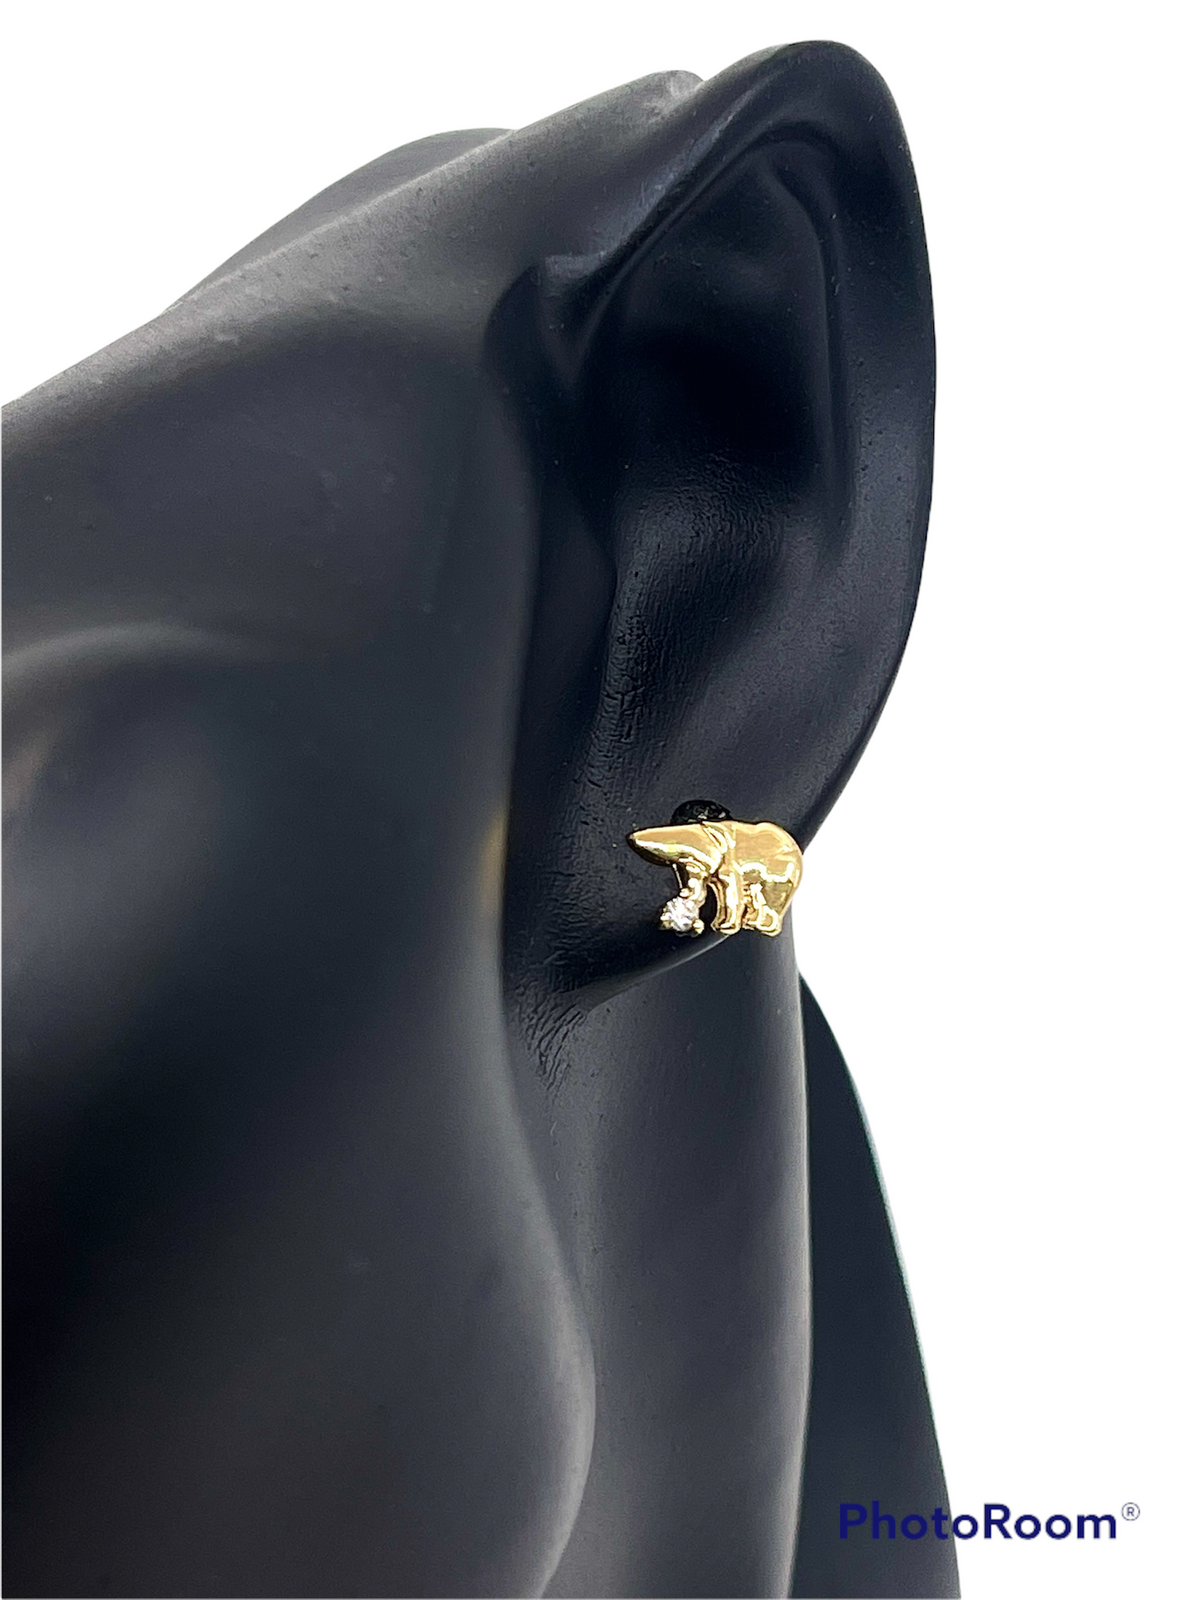 14K Yellow Gold 0.06cttw Diamond Ice Bear Earrings with Butterfly Backs - 11mm x 7mm